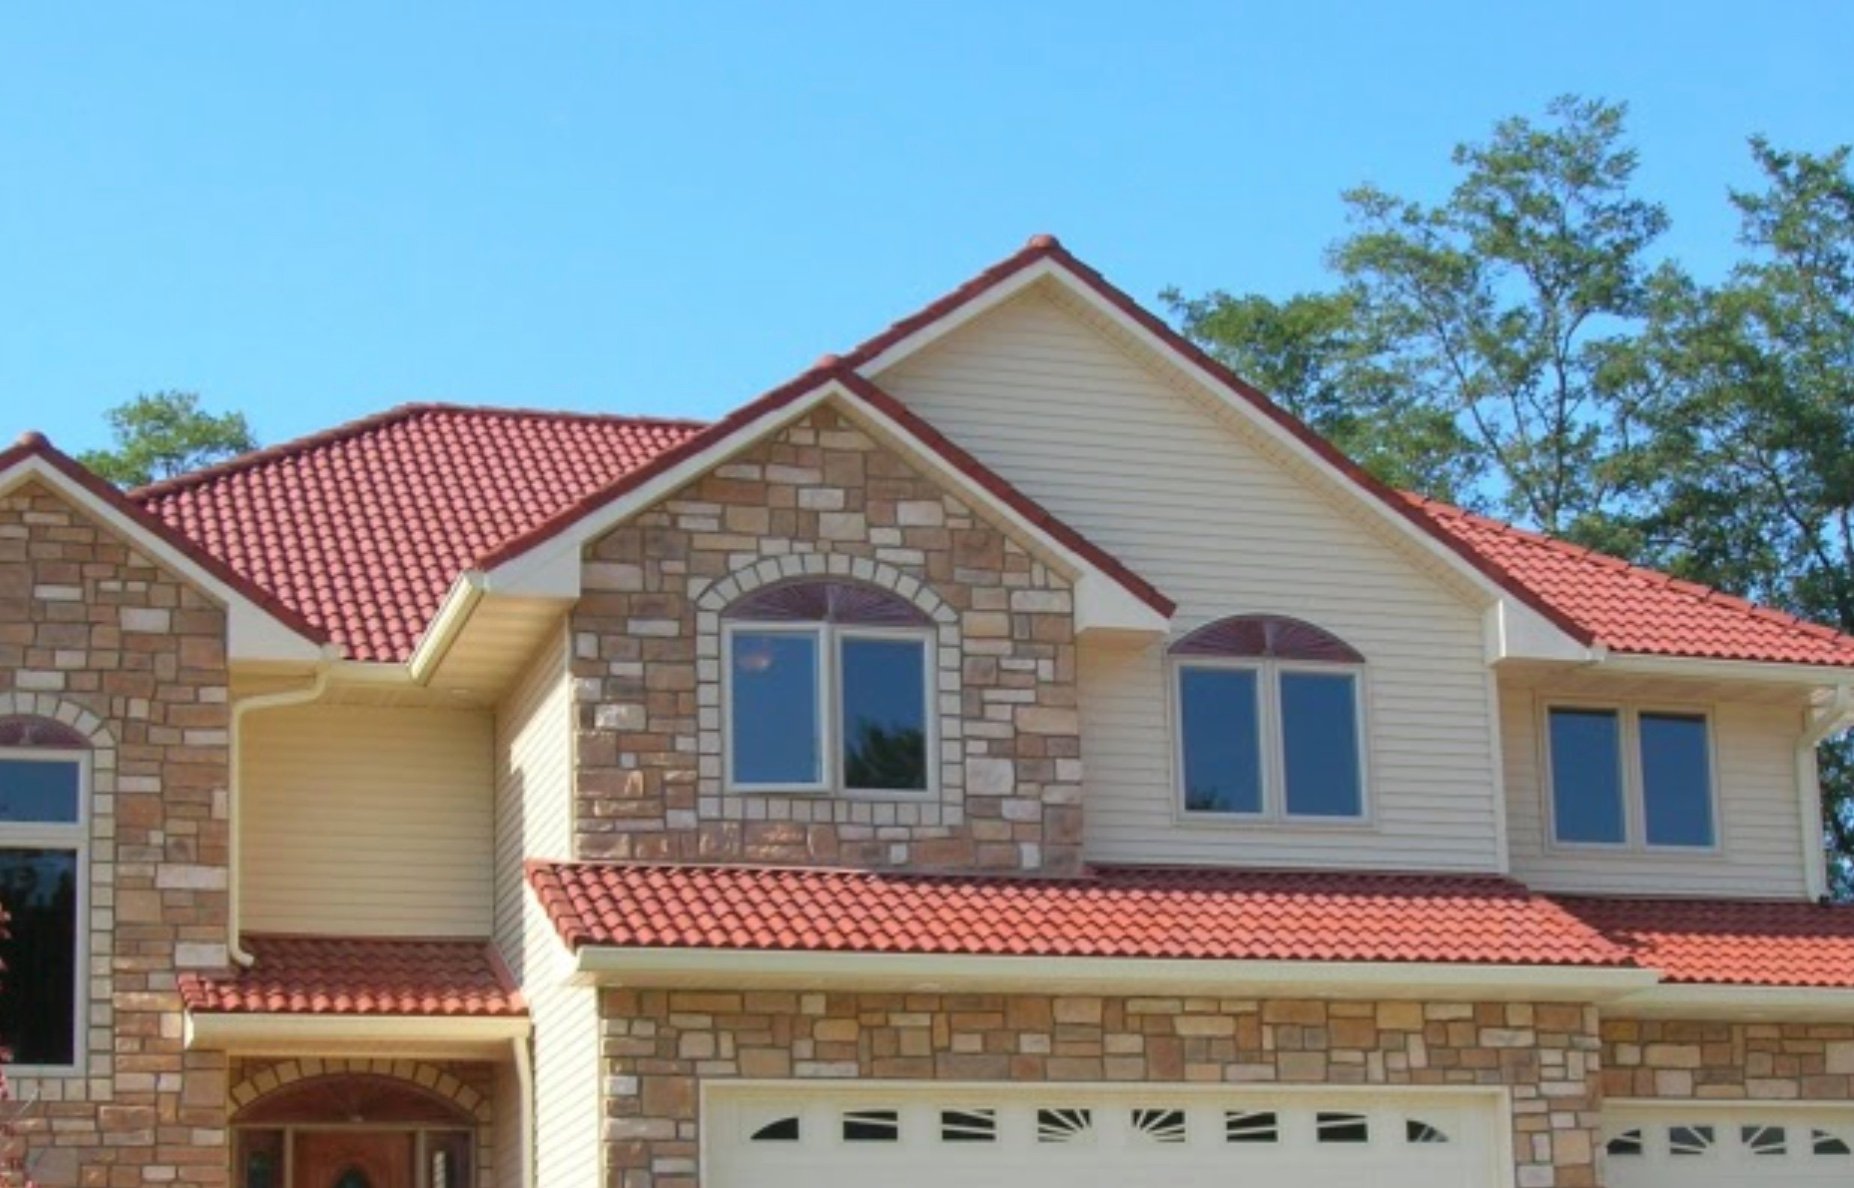 7 Home Designs Using an Orange Tile Roof - Brava Roof Tile